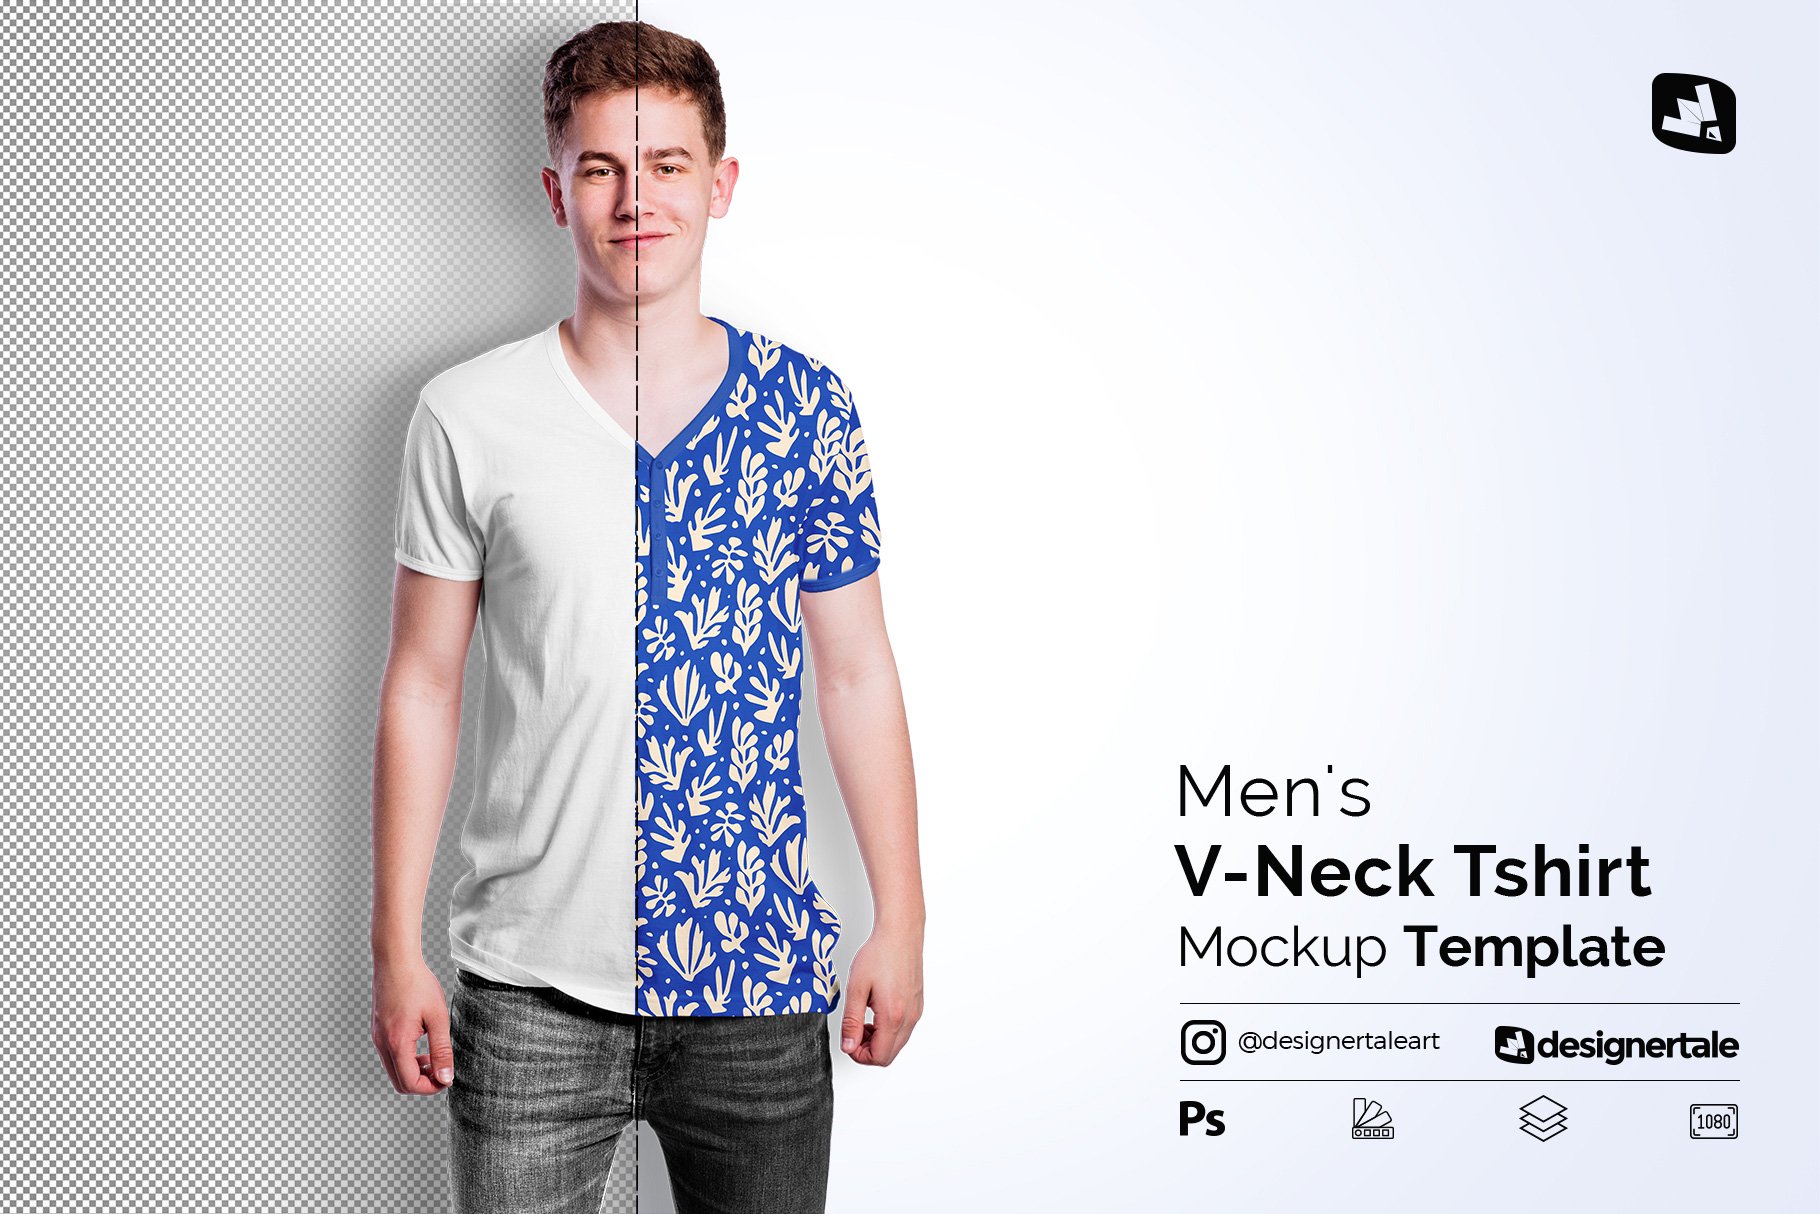 Men’s Vneck Tshirt Mockup